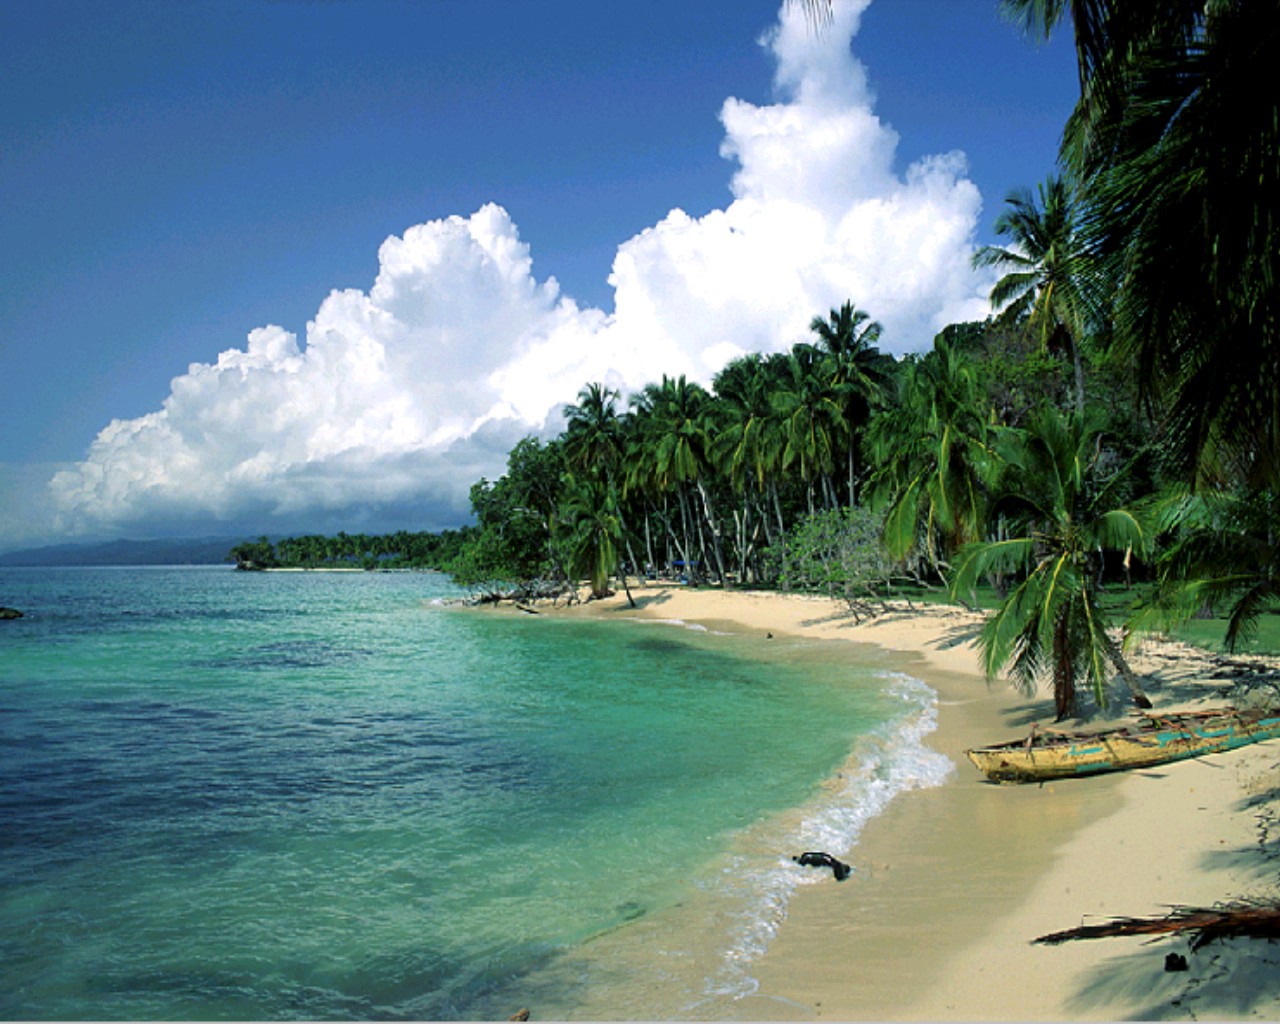 beach landscape image